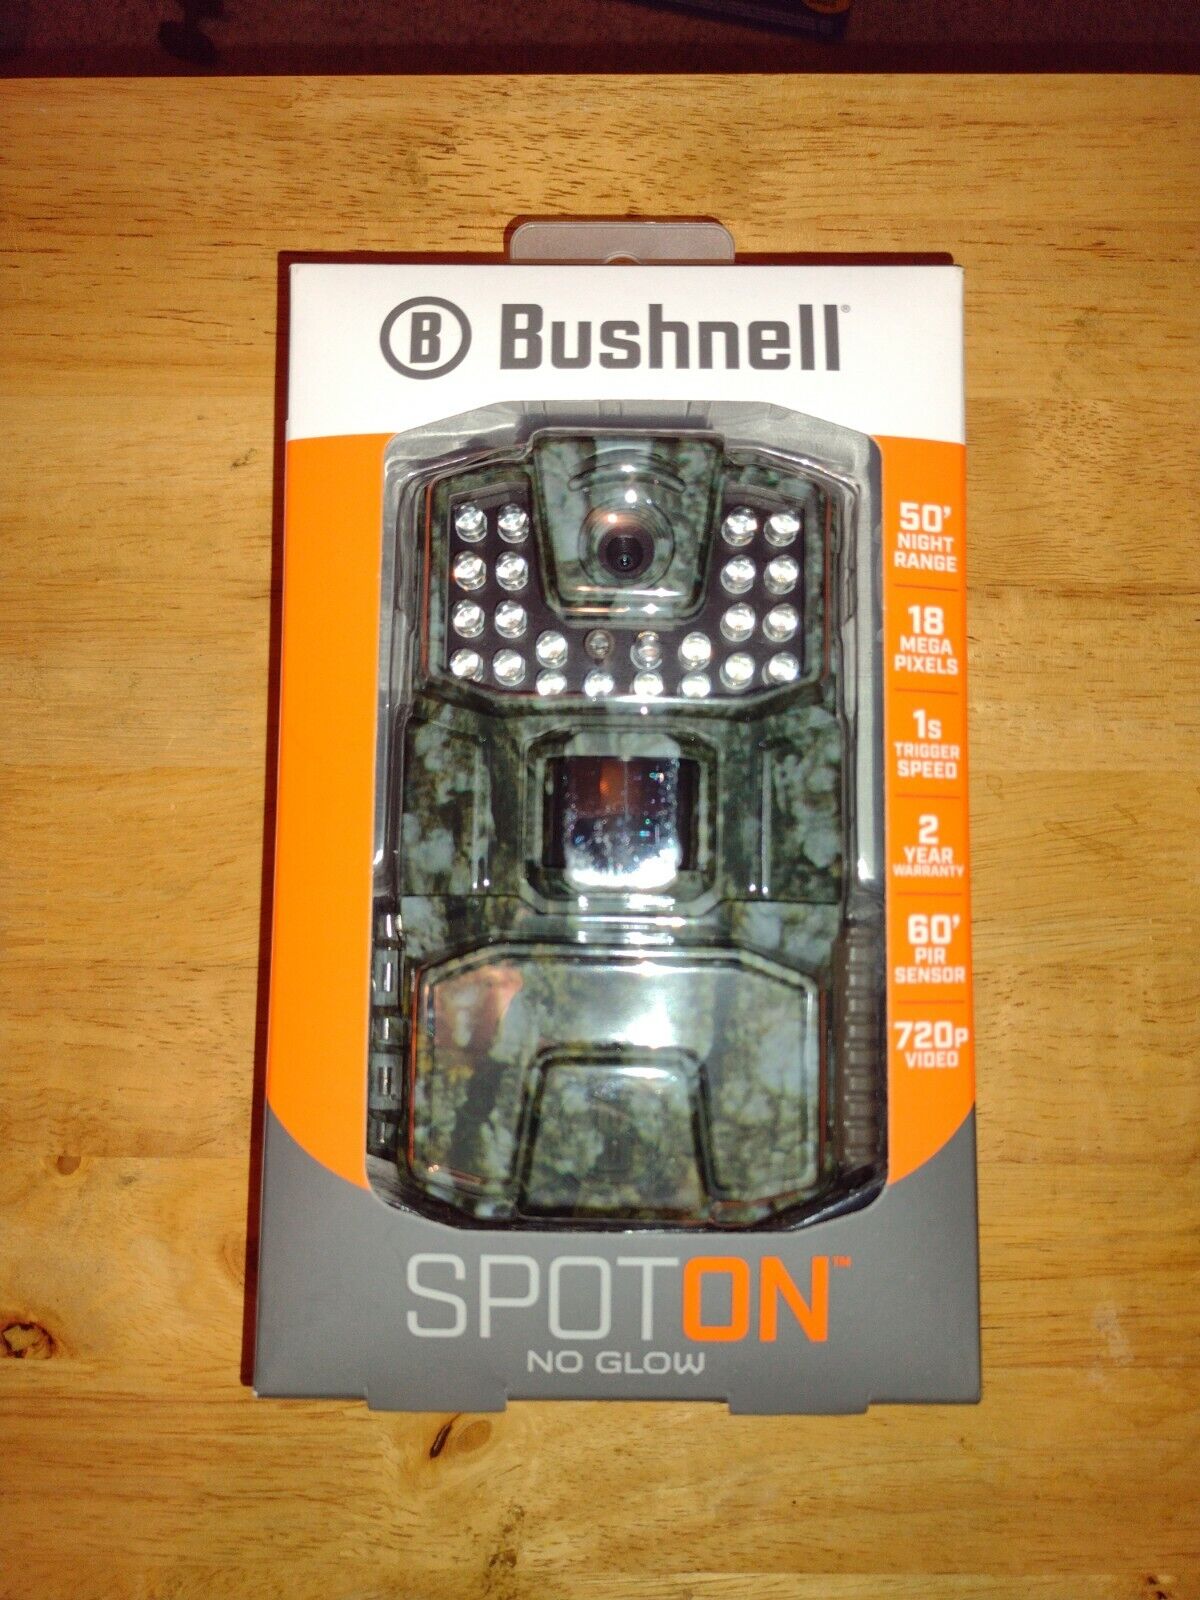 Bushnell 18 Mega-Pixel Spot On No Glow Trail Camera - Brand New